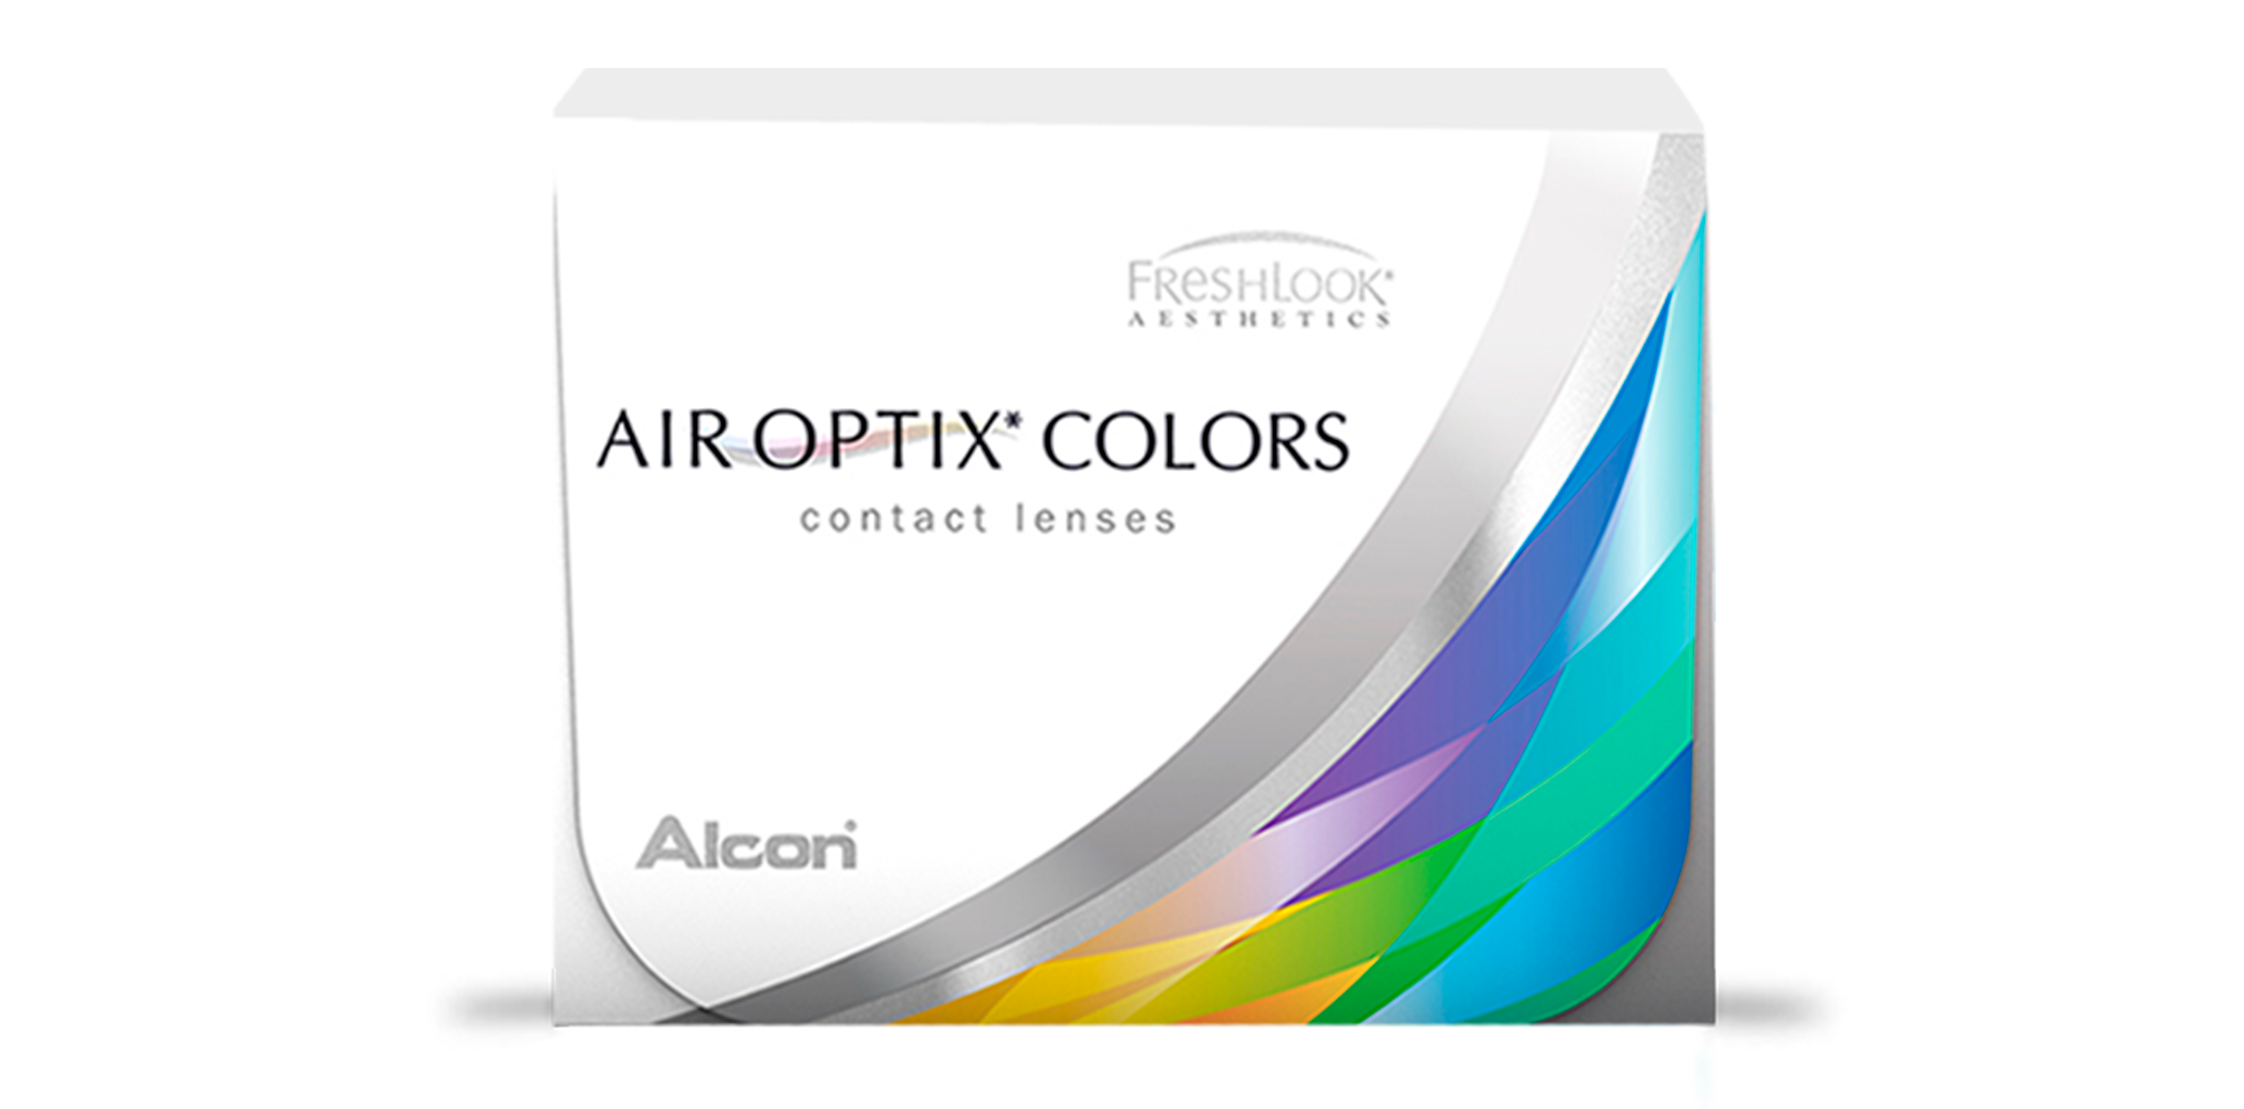 Air Optix Colors Neutros